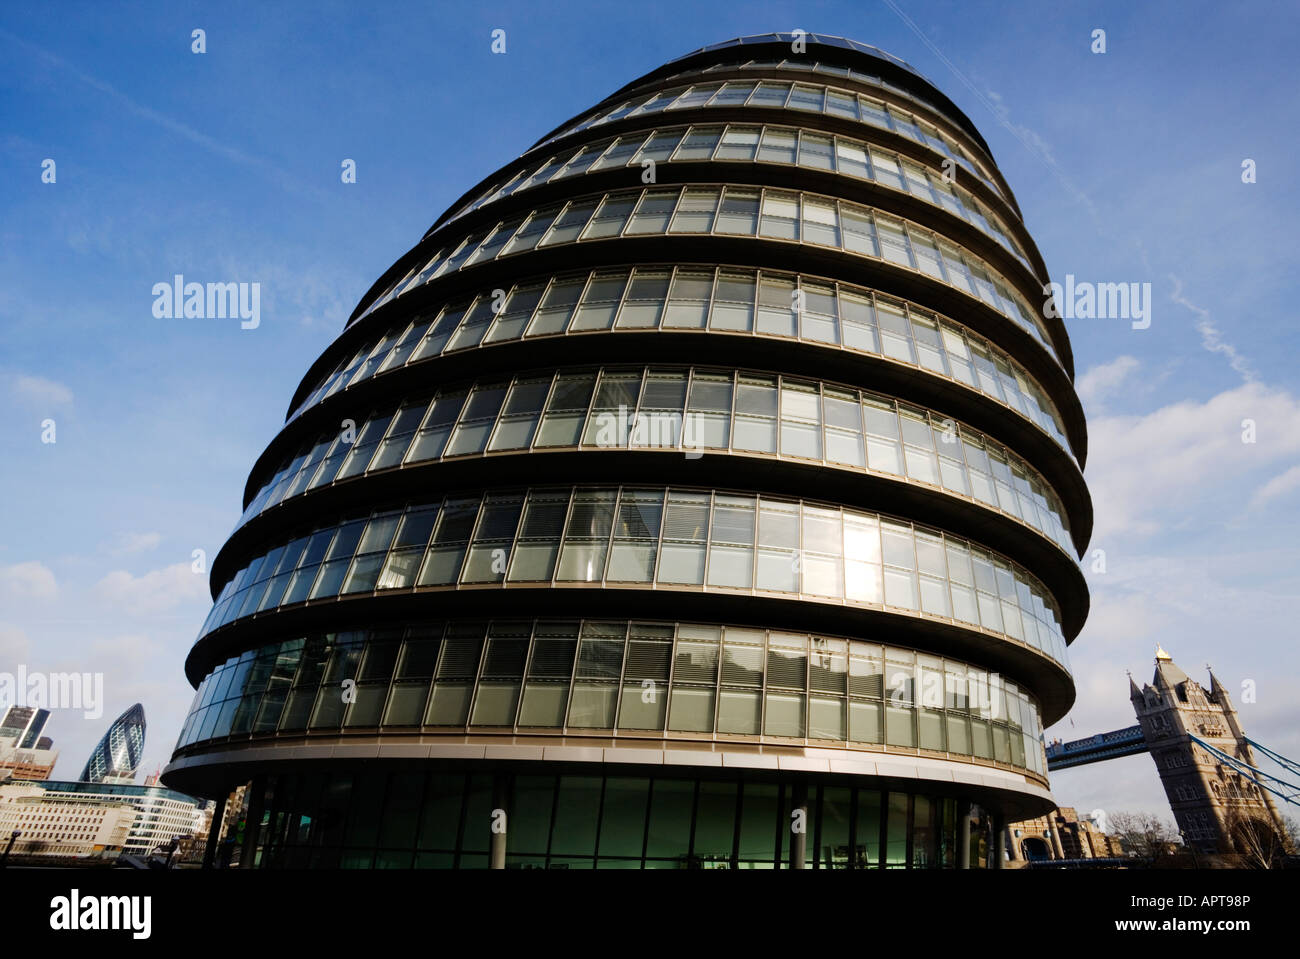 City Hall with Swiss Re & Tower Bridge, London Stock Photo - Alamy